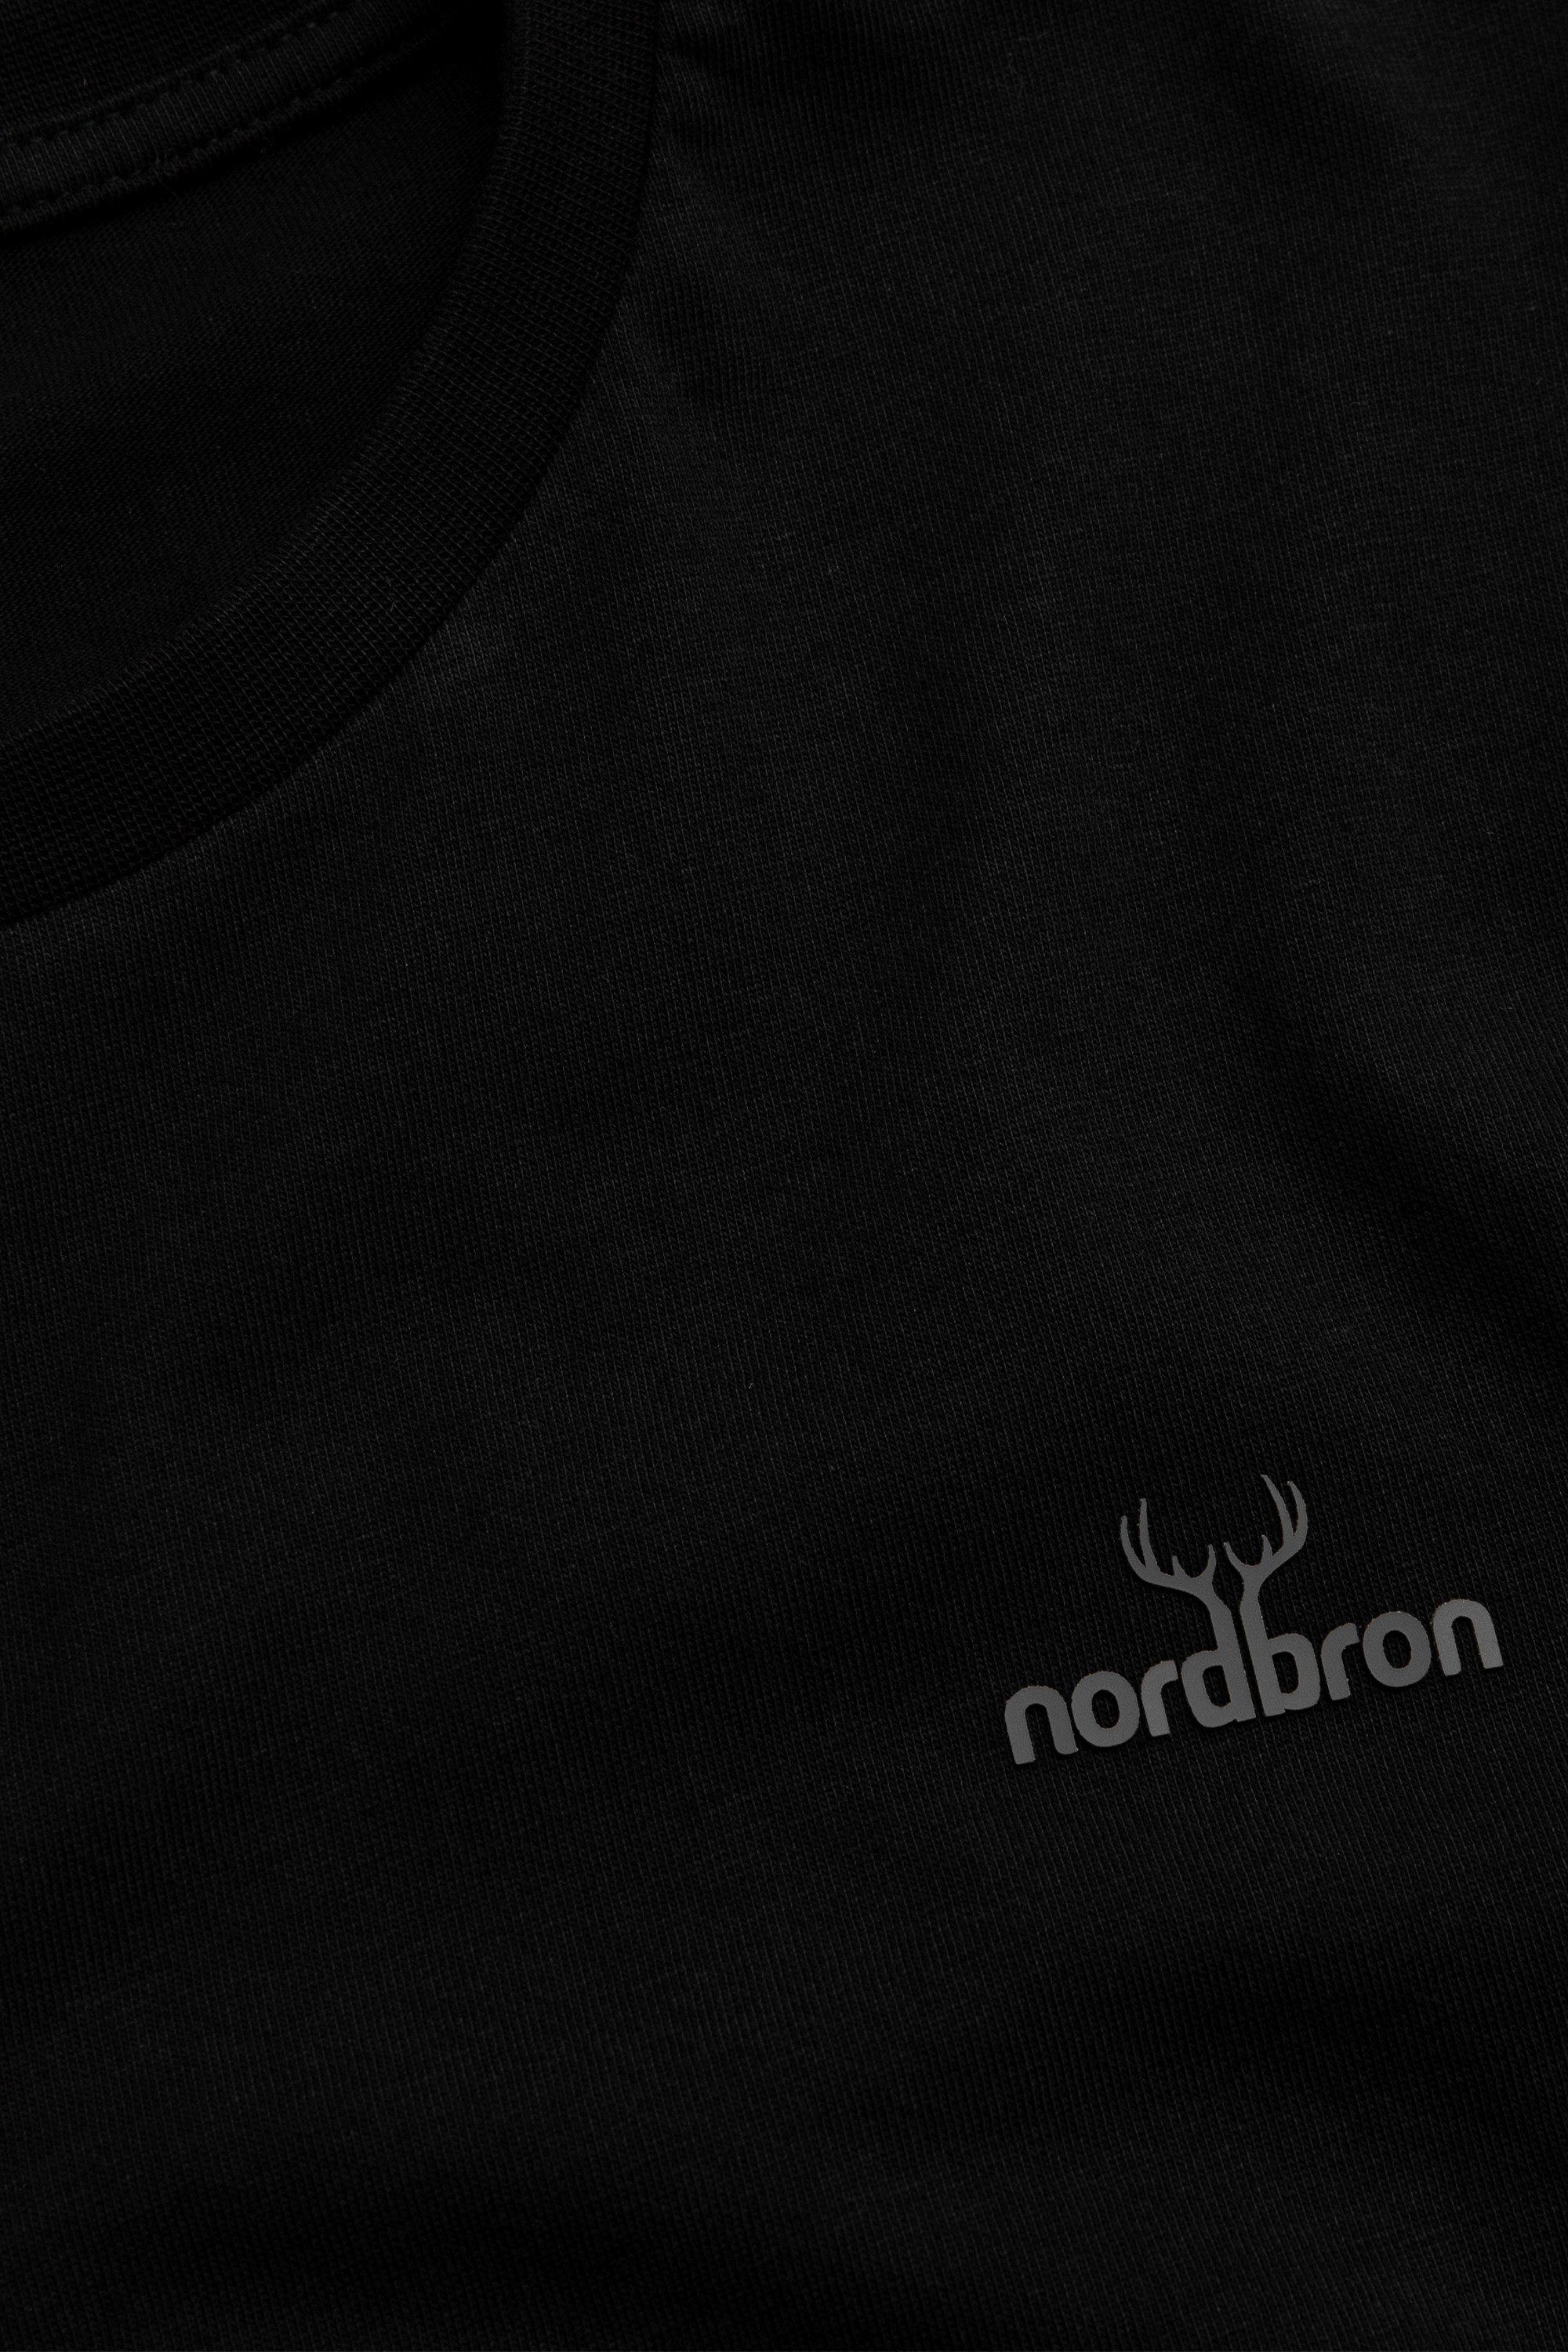 Dussel Nordbron T-shirt